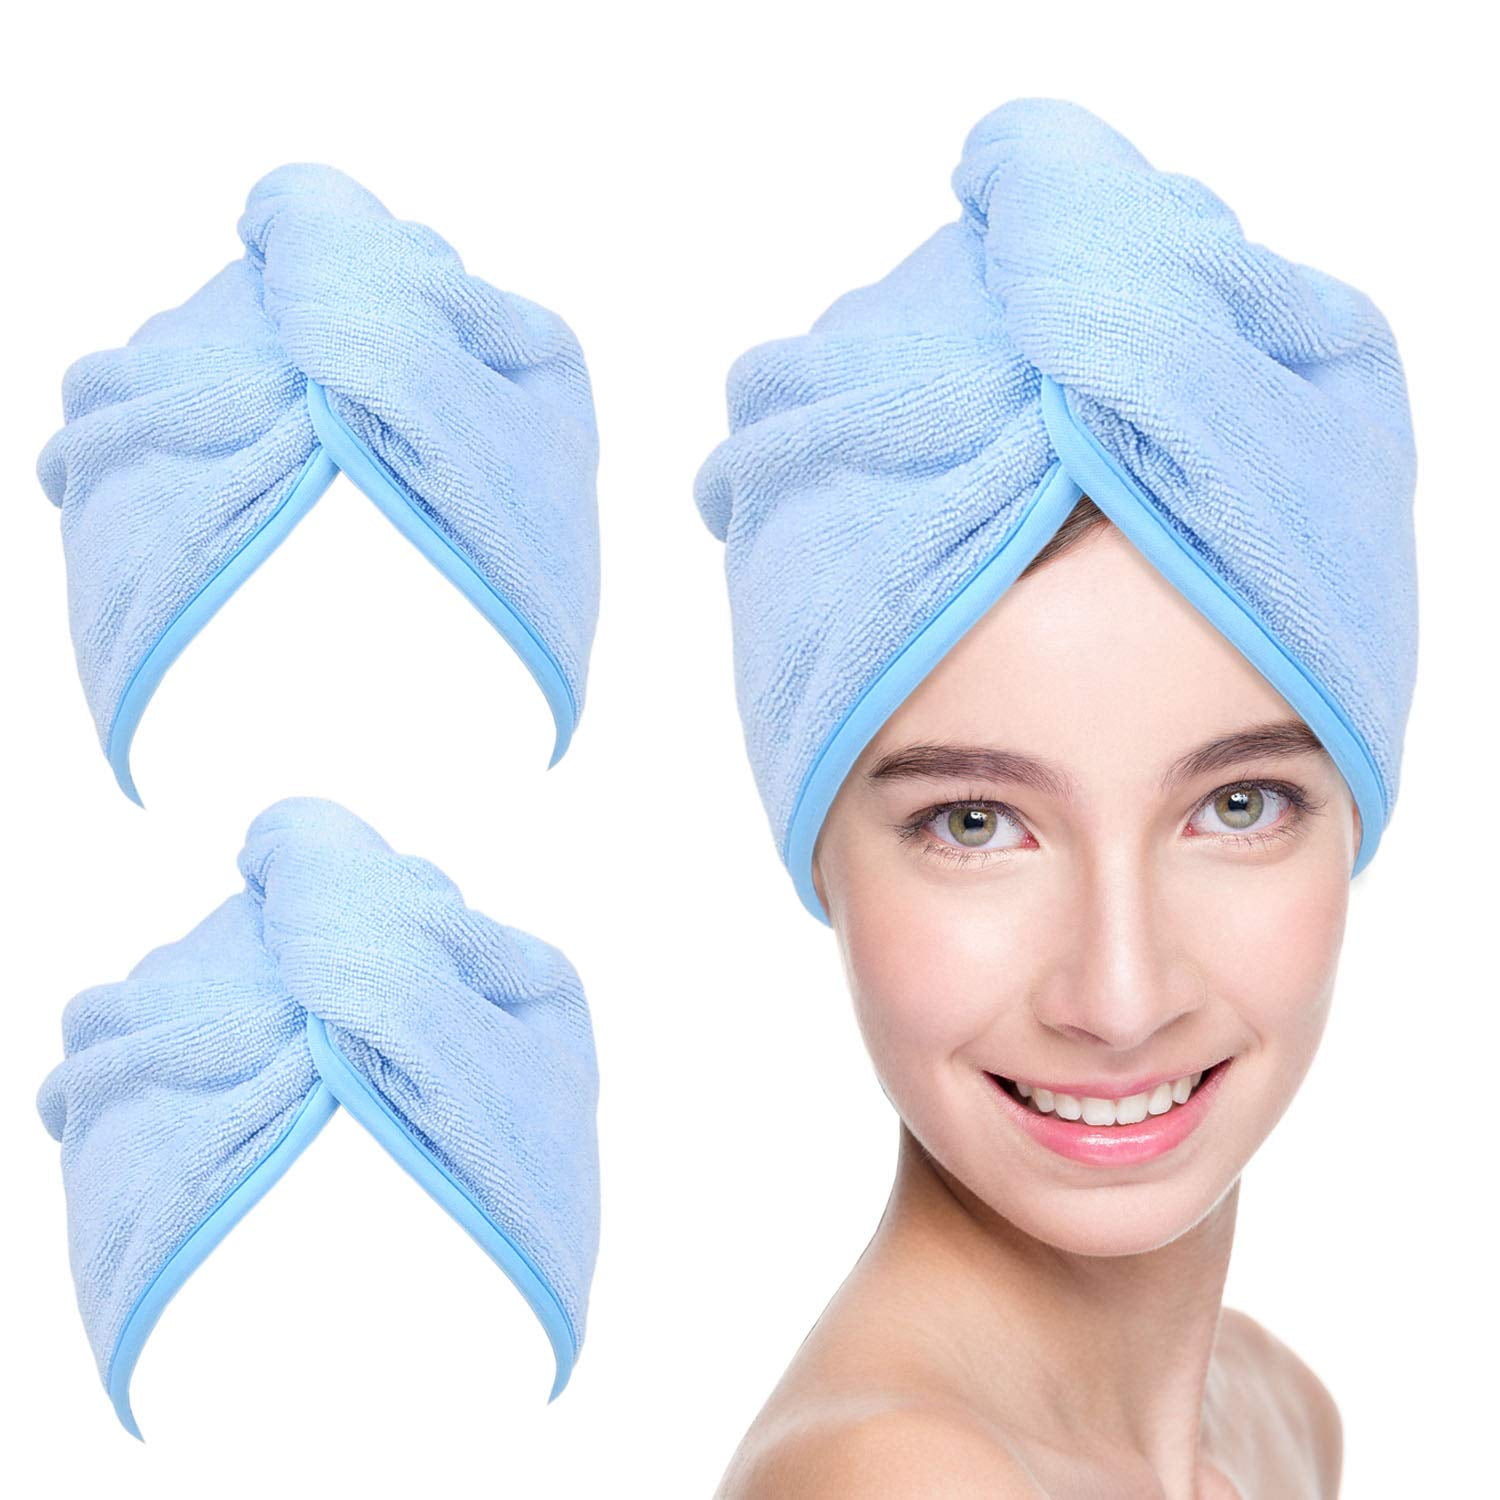 3 pcs Headphone Microfiber Band Dries Hair Towel Turban Fast Drying